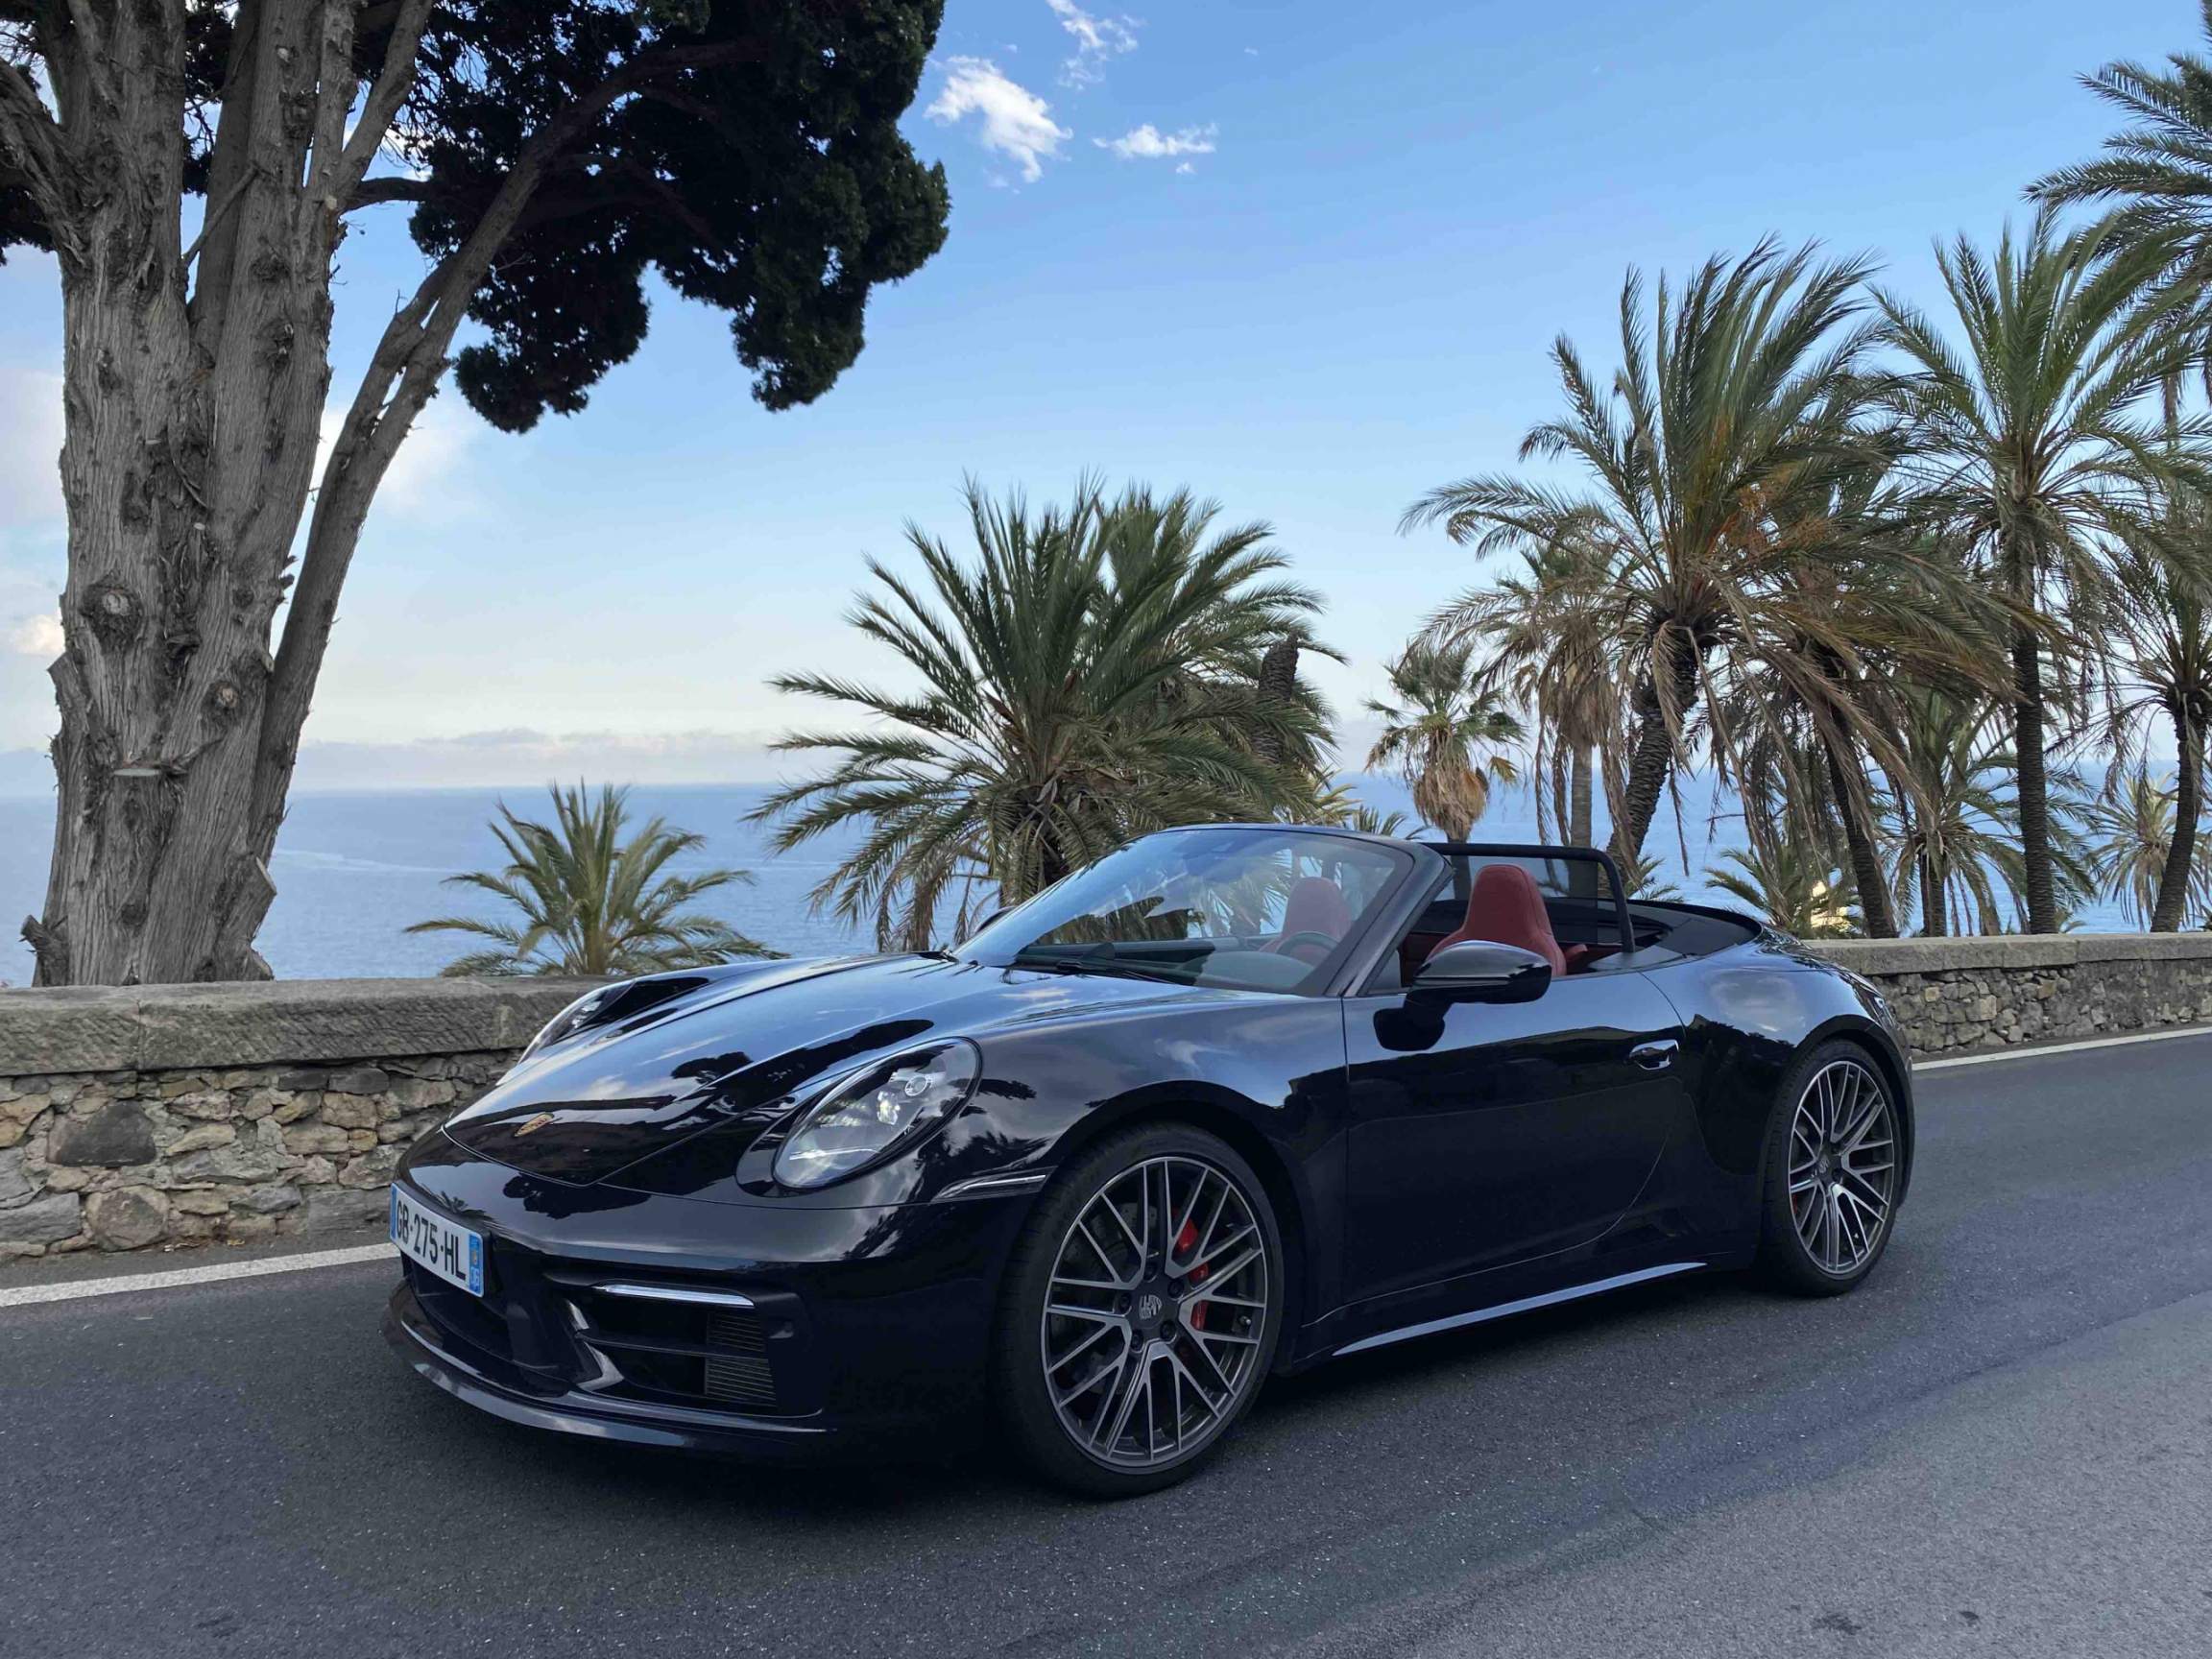 Luxury car hire Monaco,Hire Porsche Antibes, luxury car rental lowest price promise